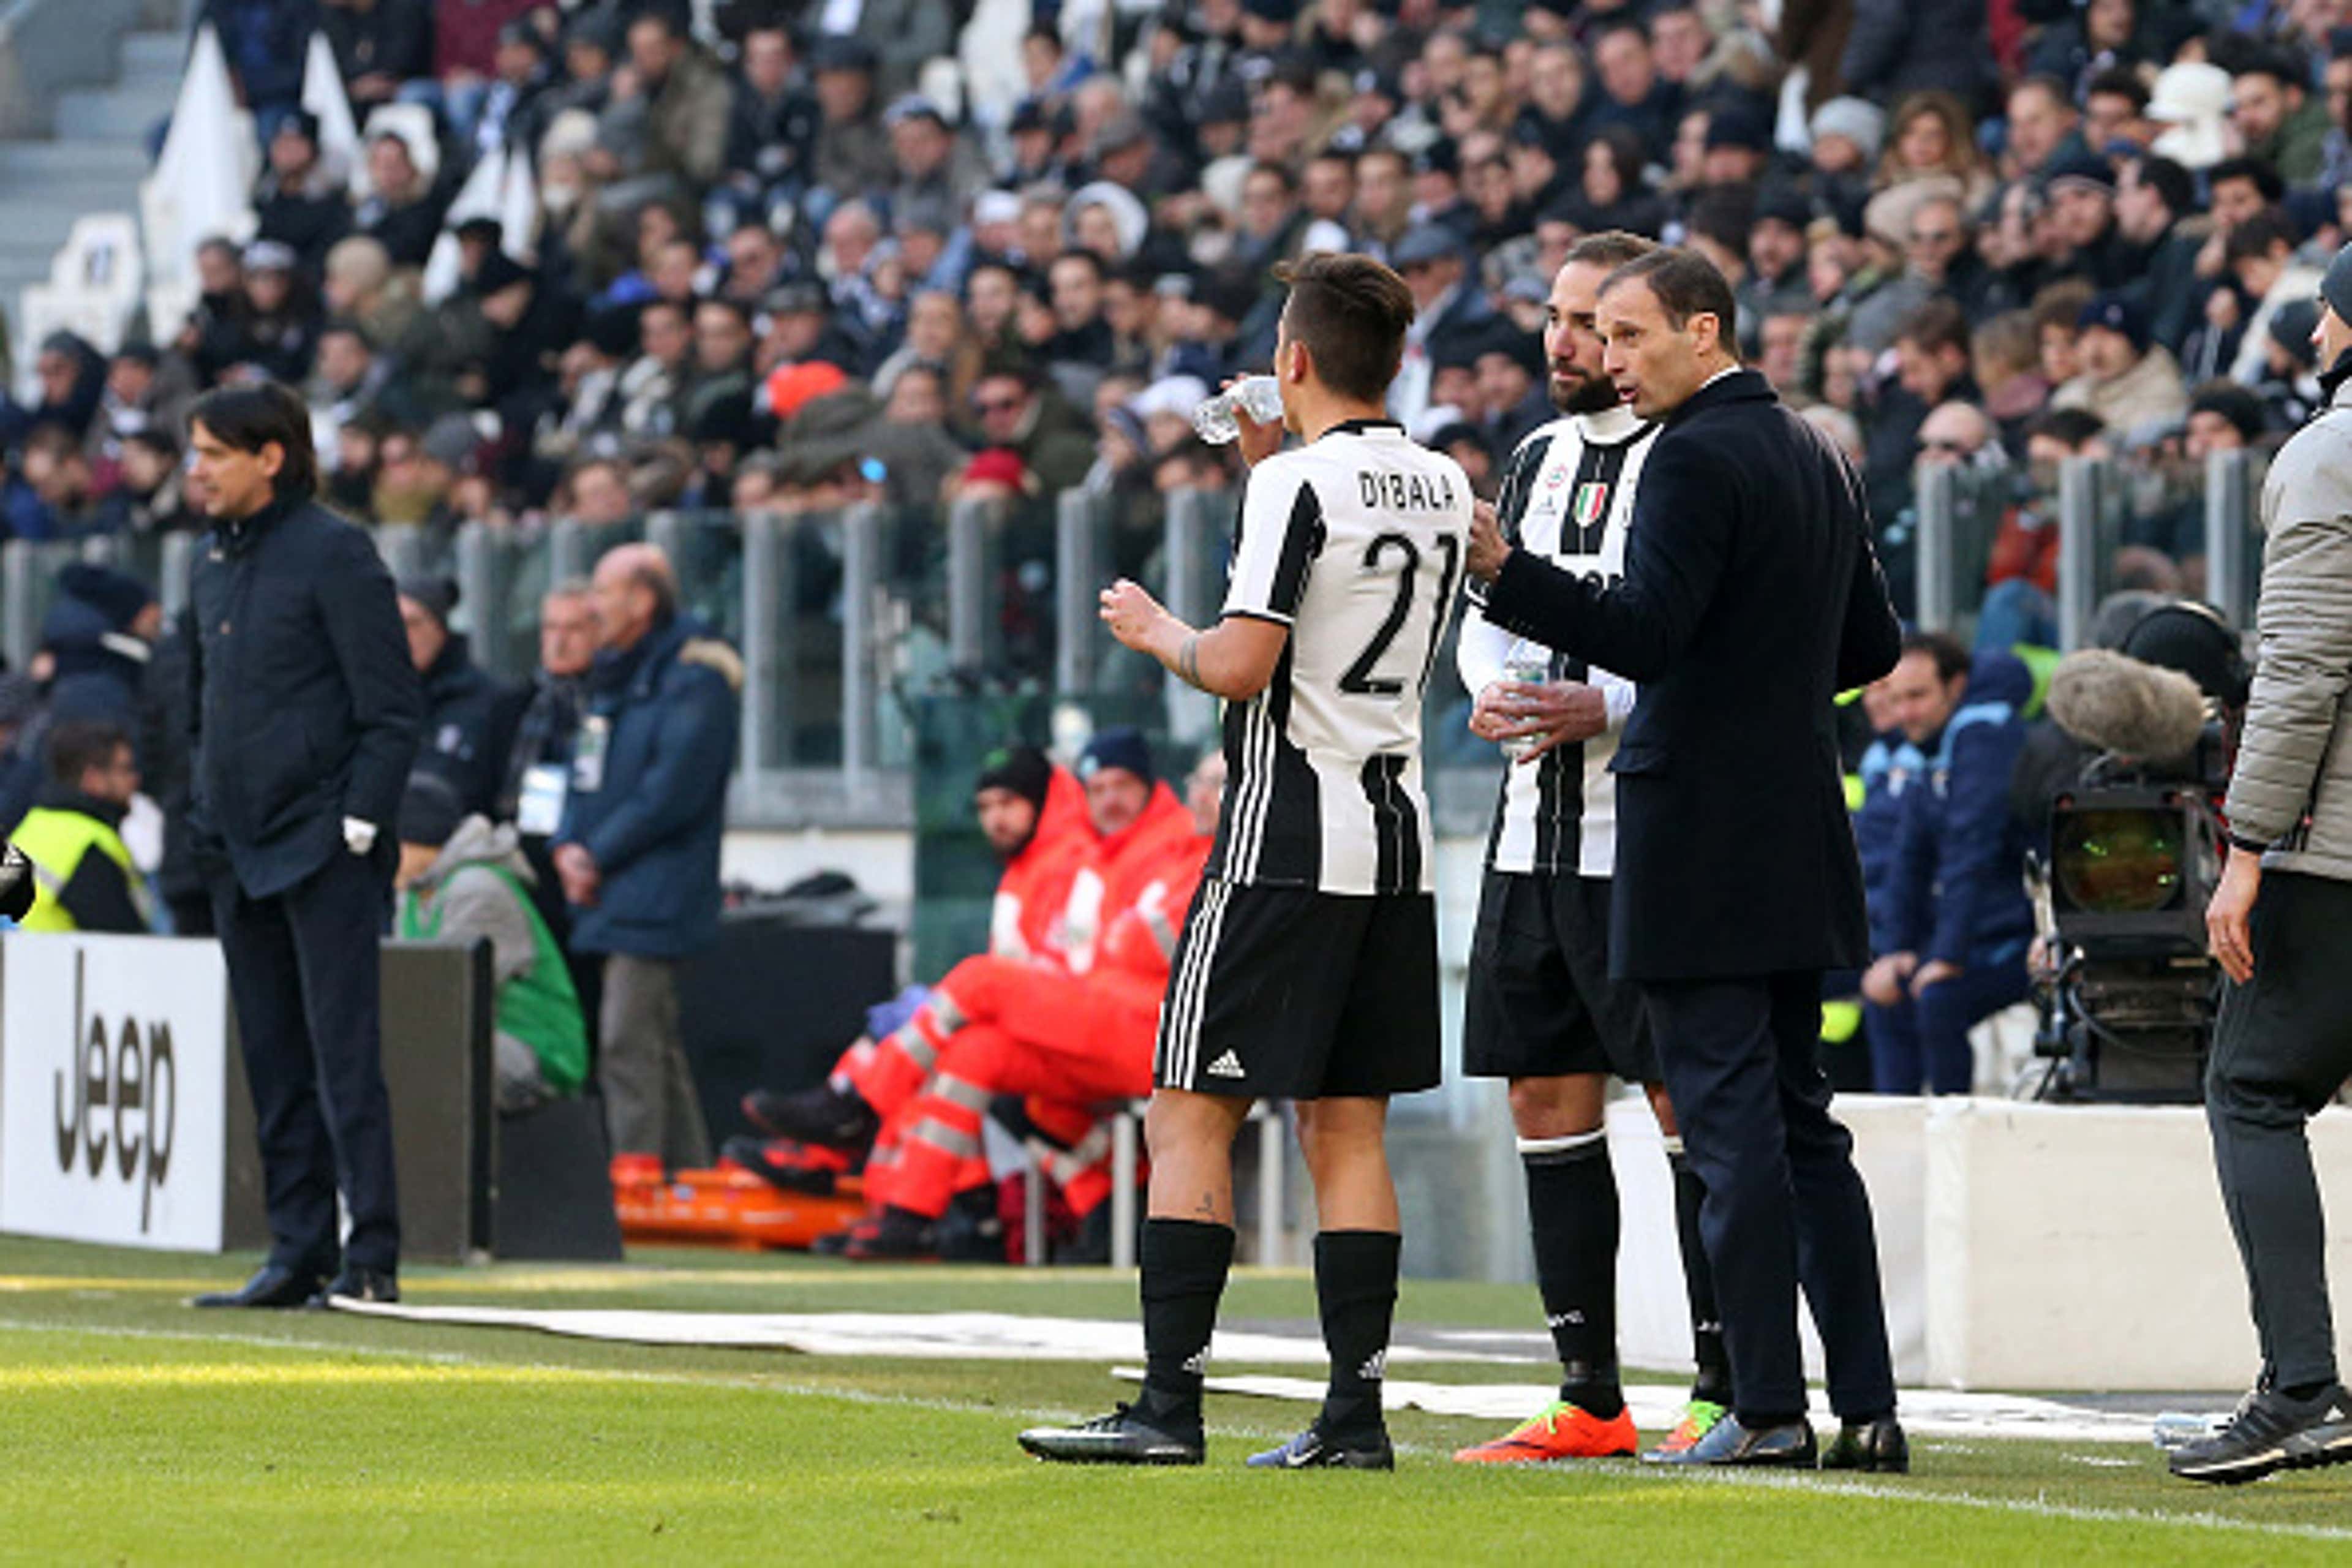 Allegri Dybala Higuain (Juventus)